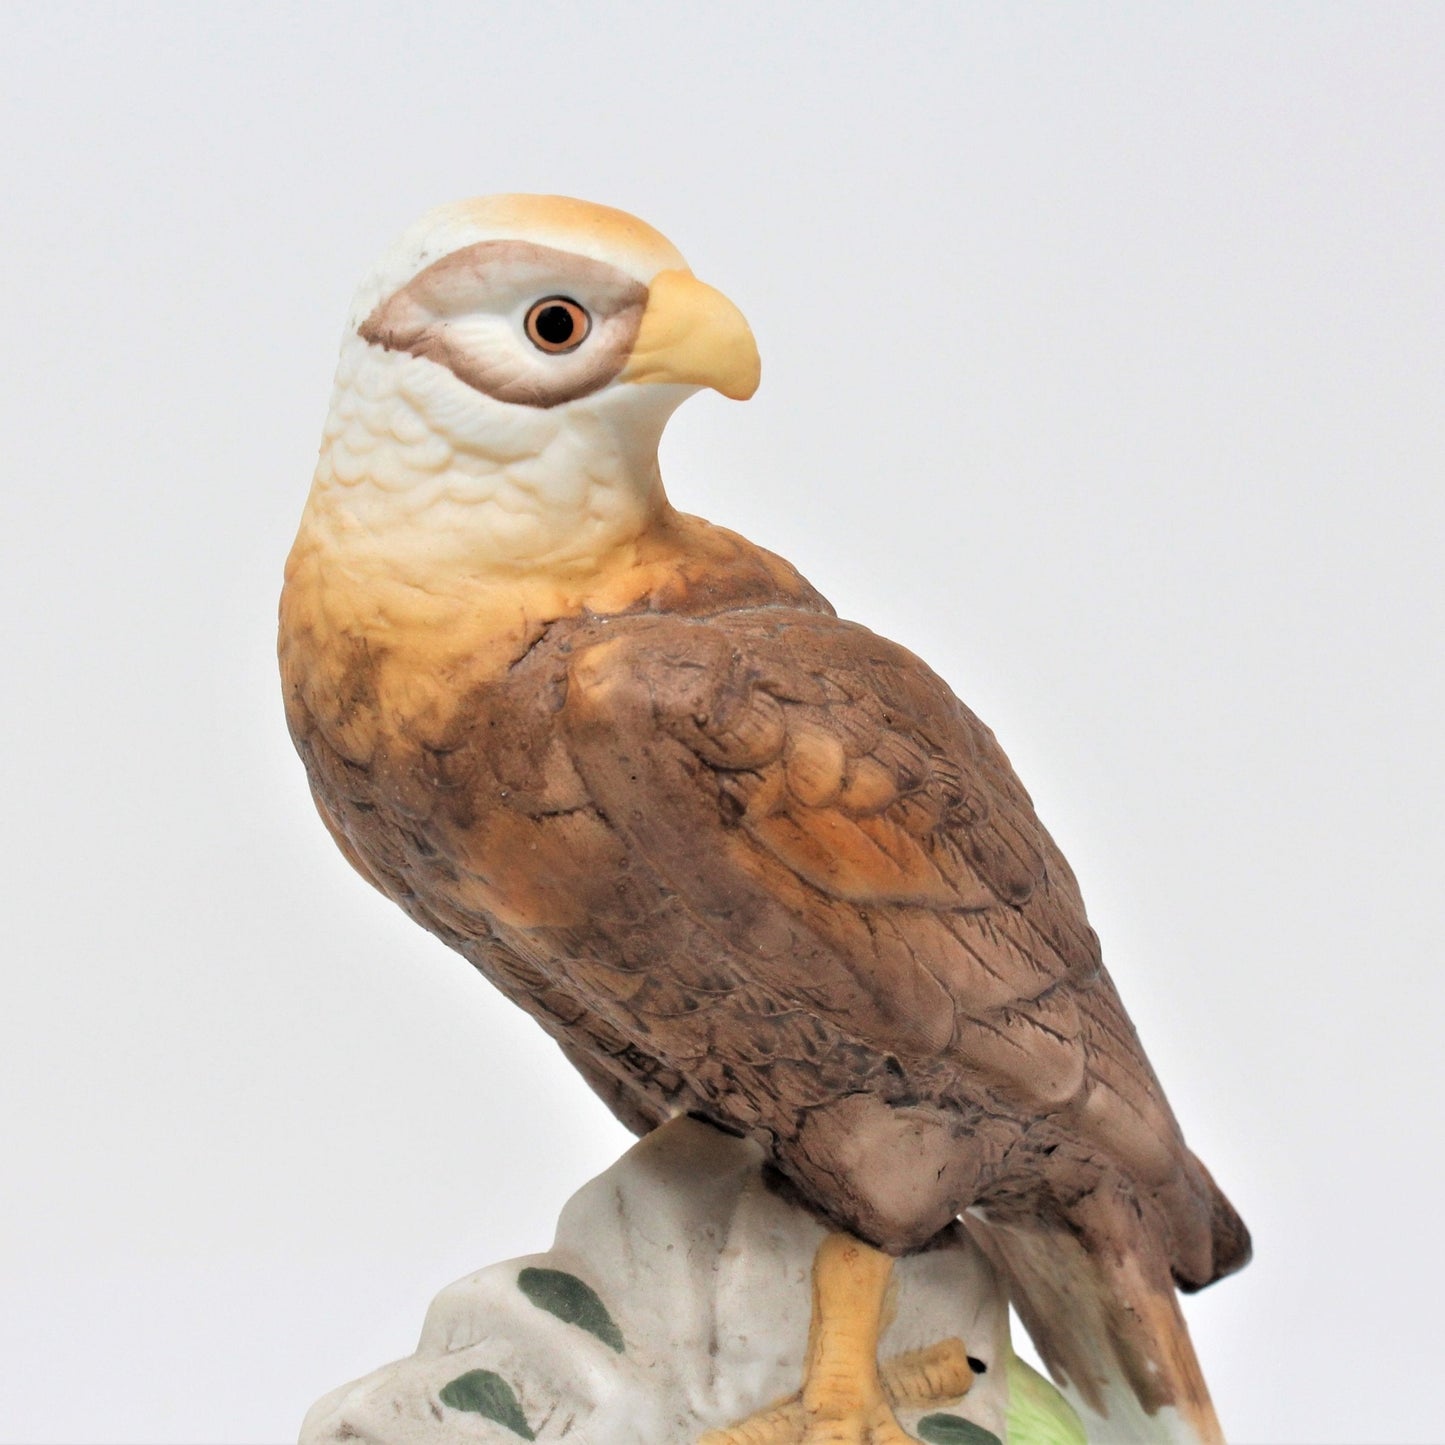 Music Box, Eagle Falcon Figurine, Plays Born Free, Porcelain, Vintage